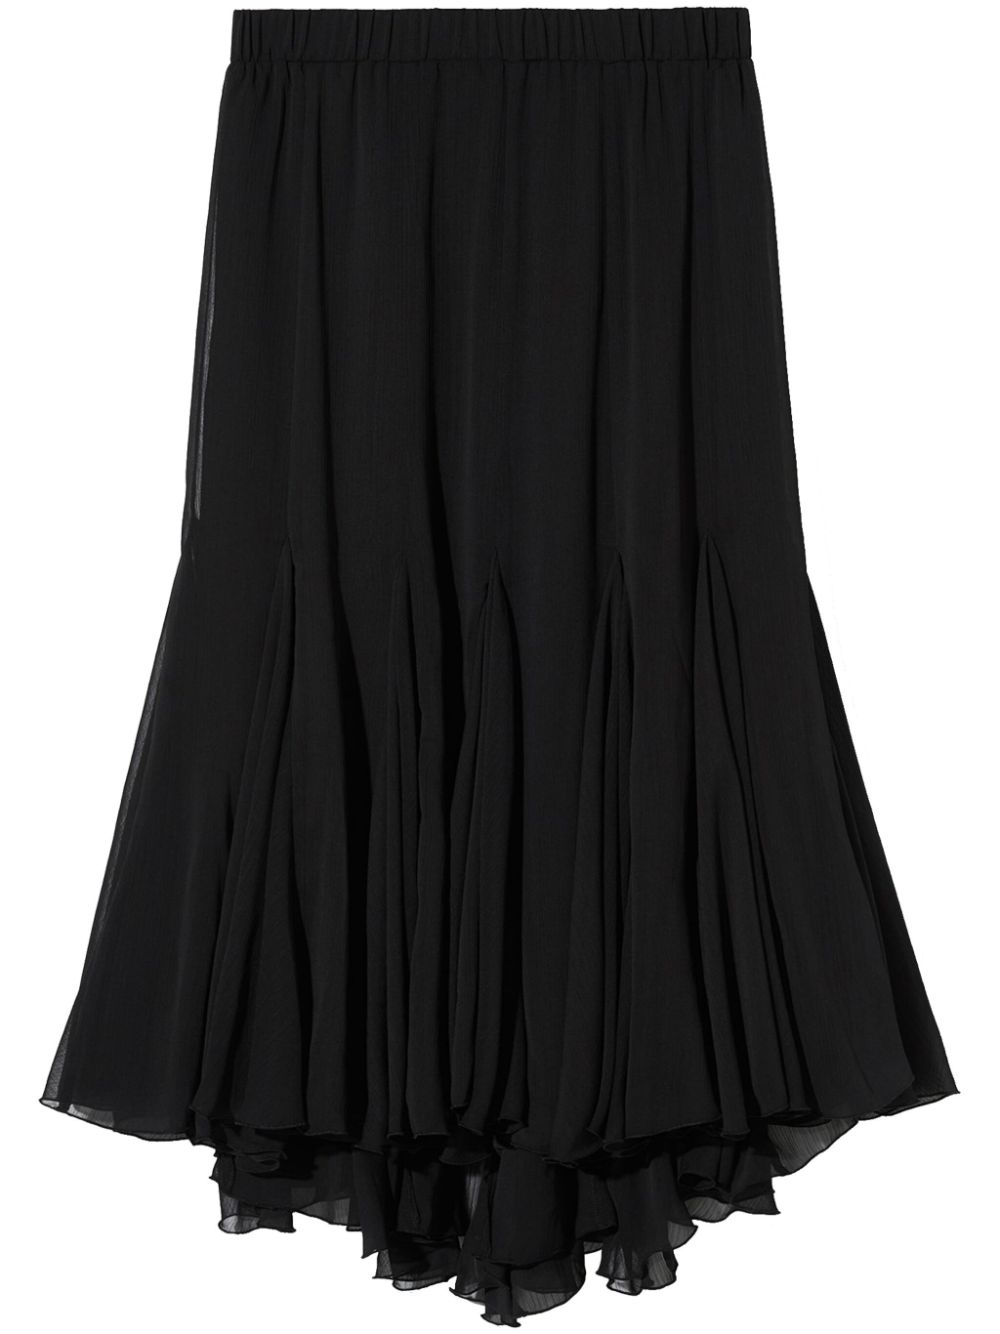 B+ab 分层式百褶中长半身裙 In Black